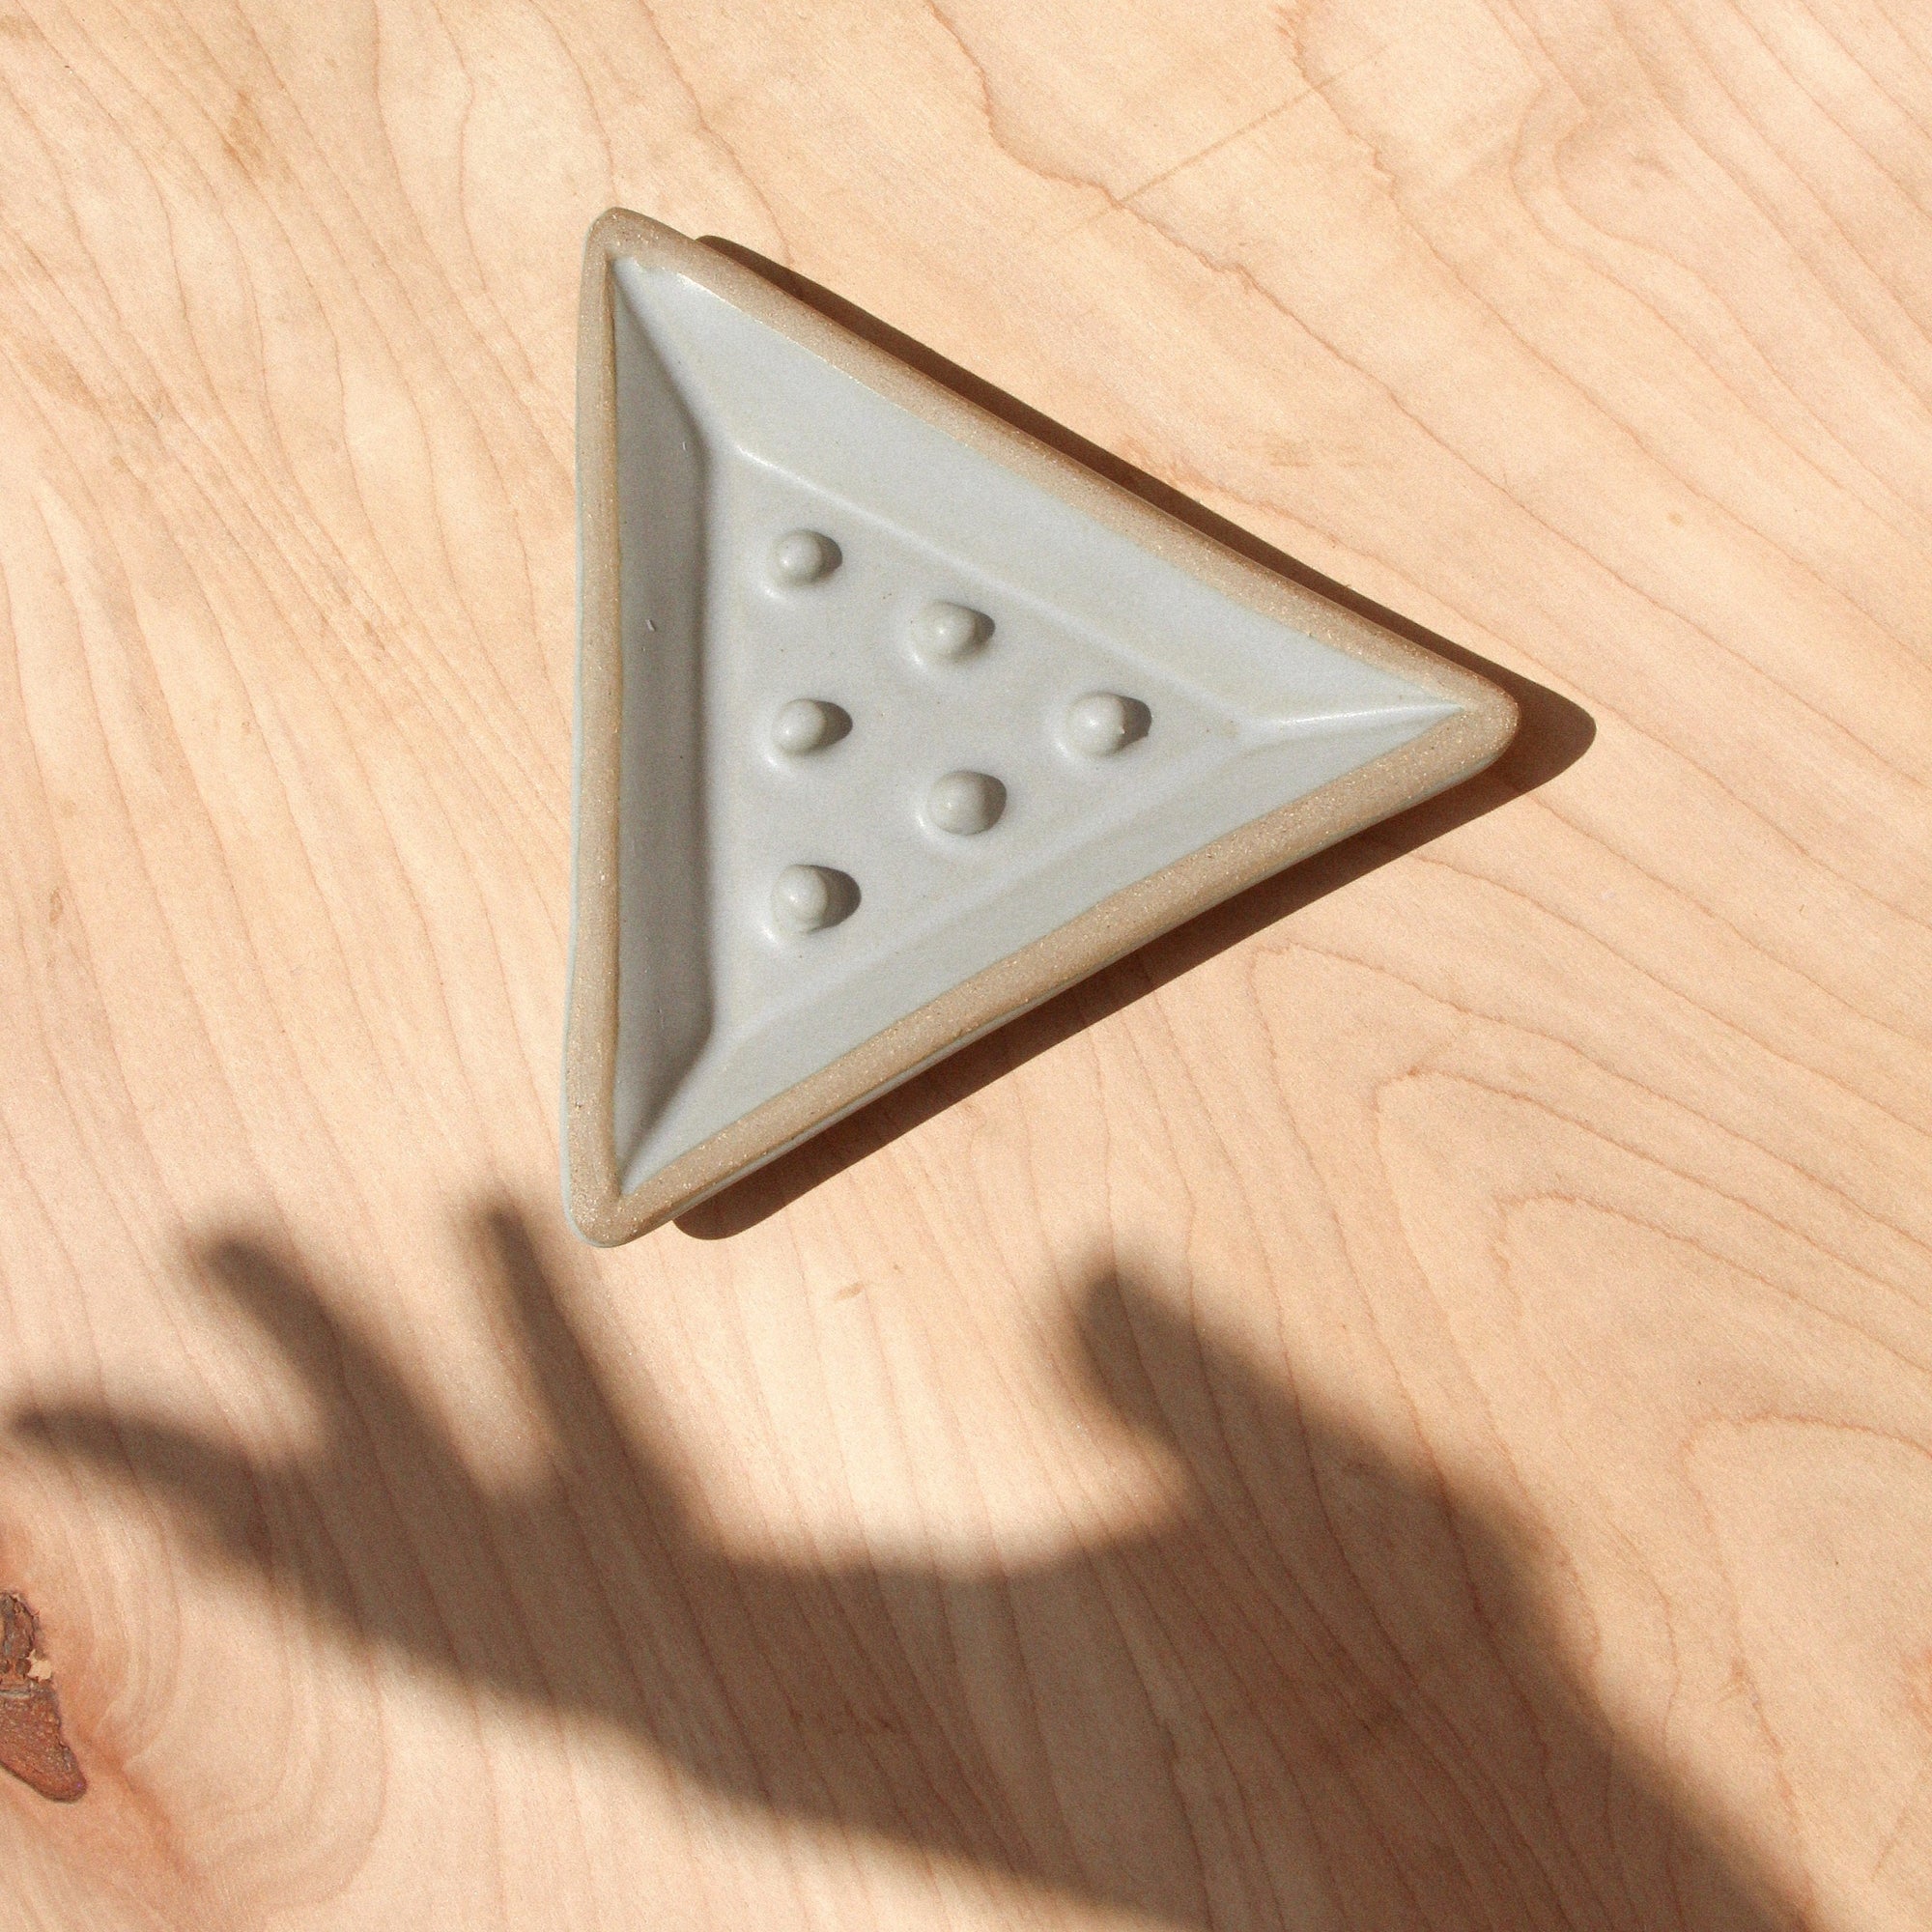 A ceramic triangular soap dish and shadow hand against wood grain